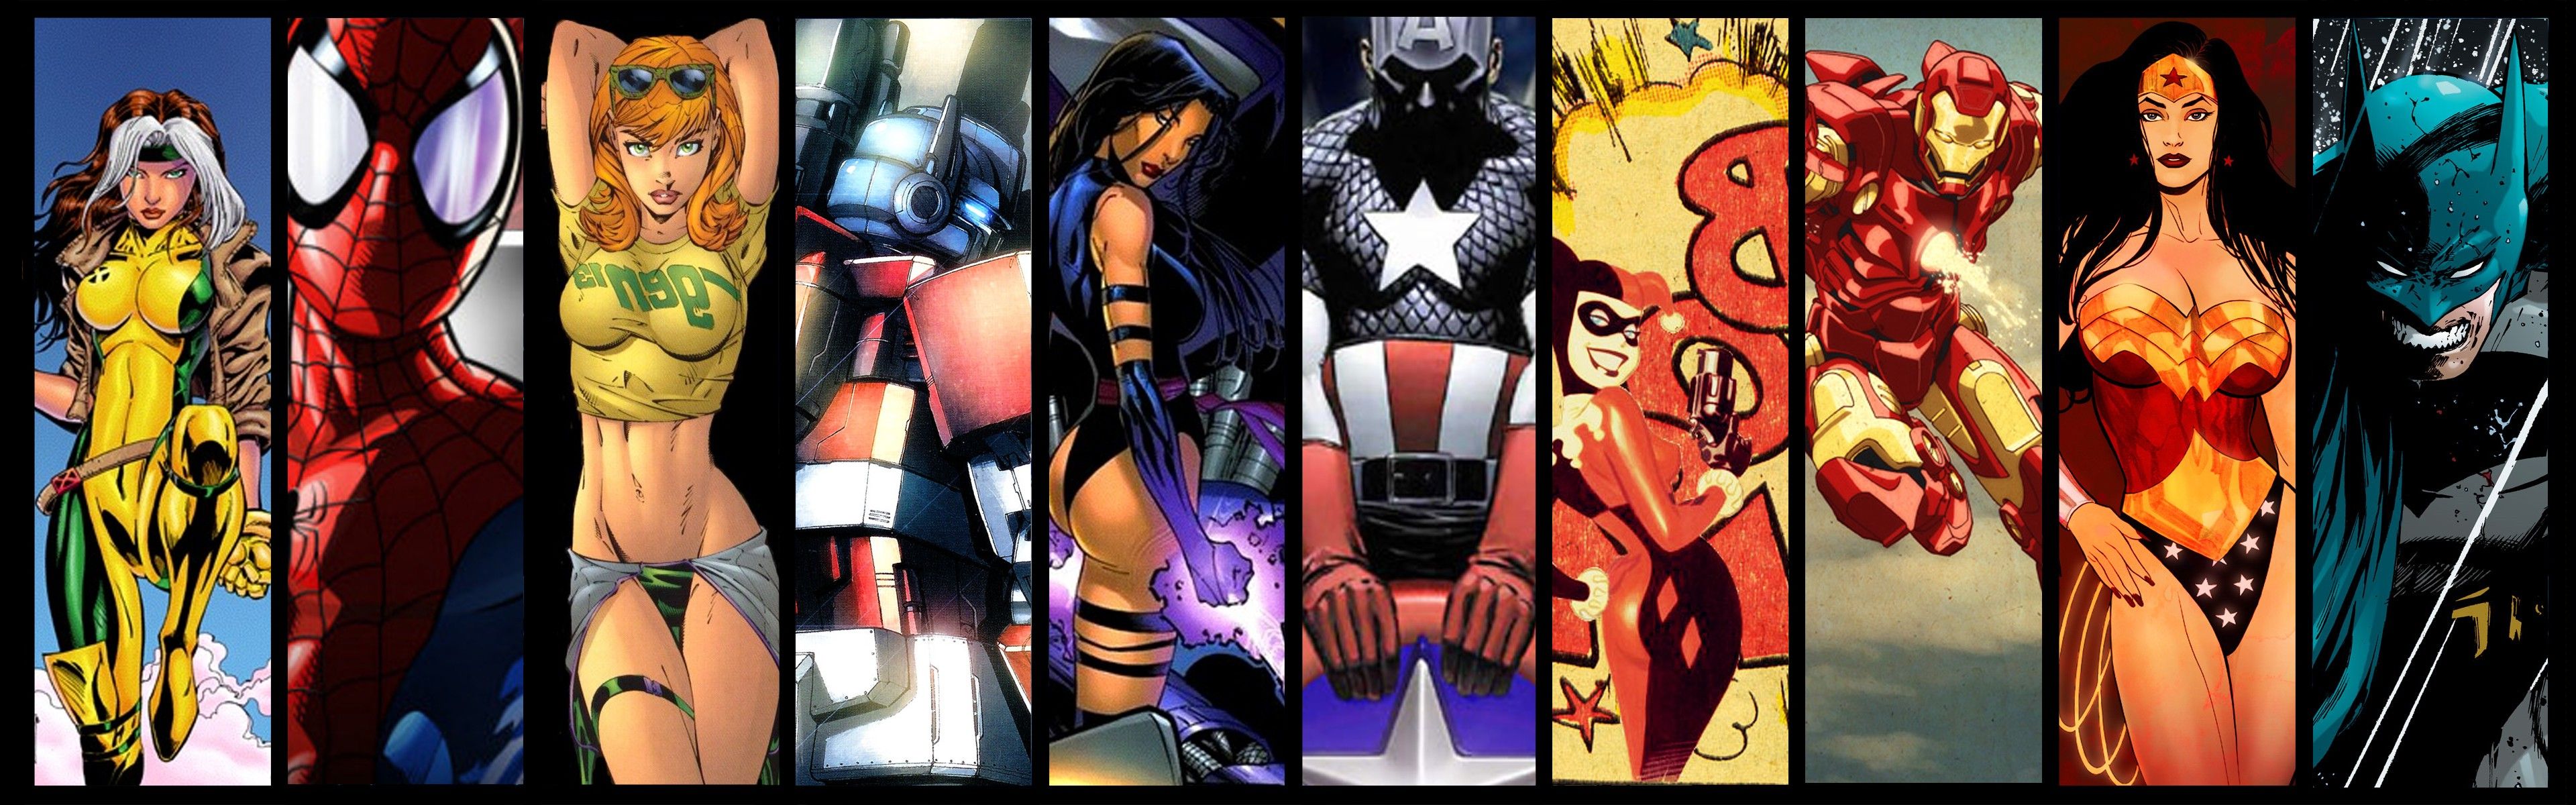 Marvel Comics, The Avengers Wallpaper HD / Desktop and Mobile